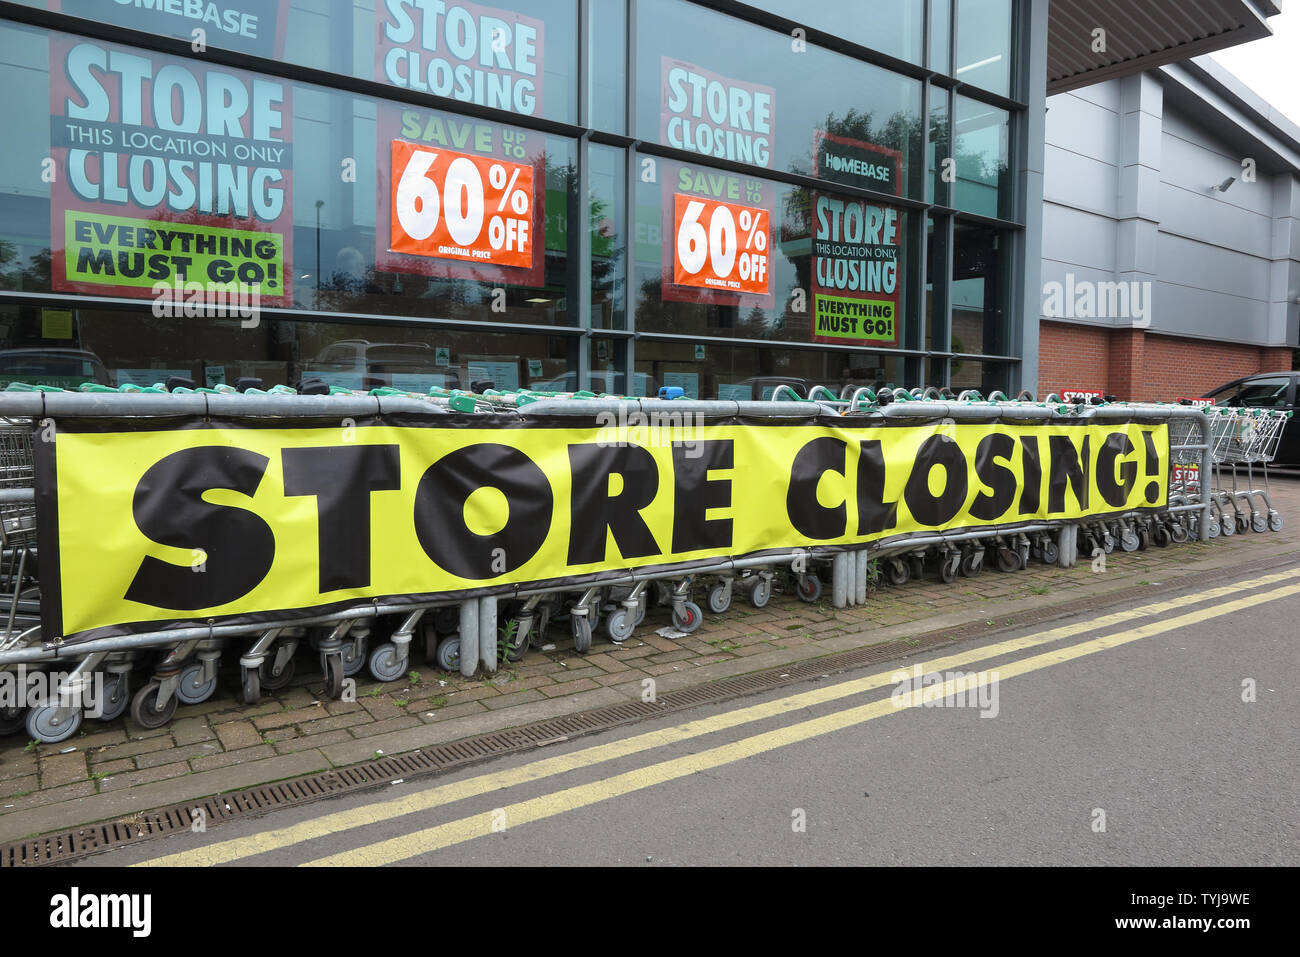 Store Closing sign at Homebase, Market Drayton, Shropshire Stock Photo